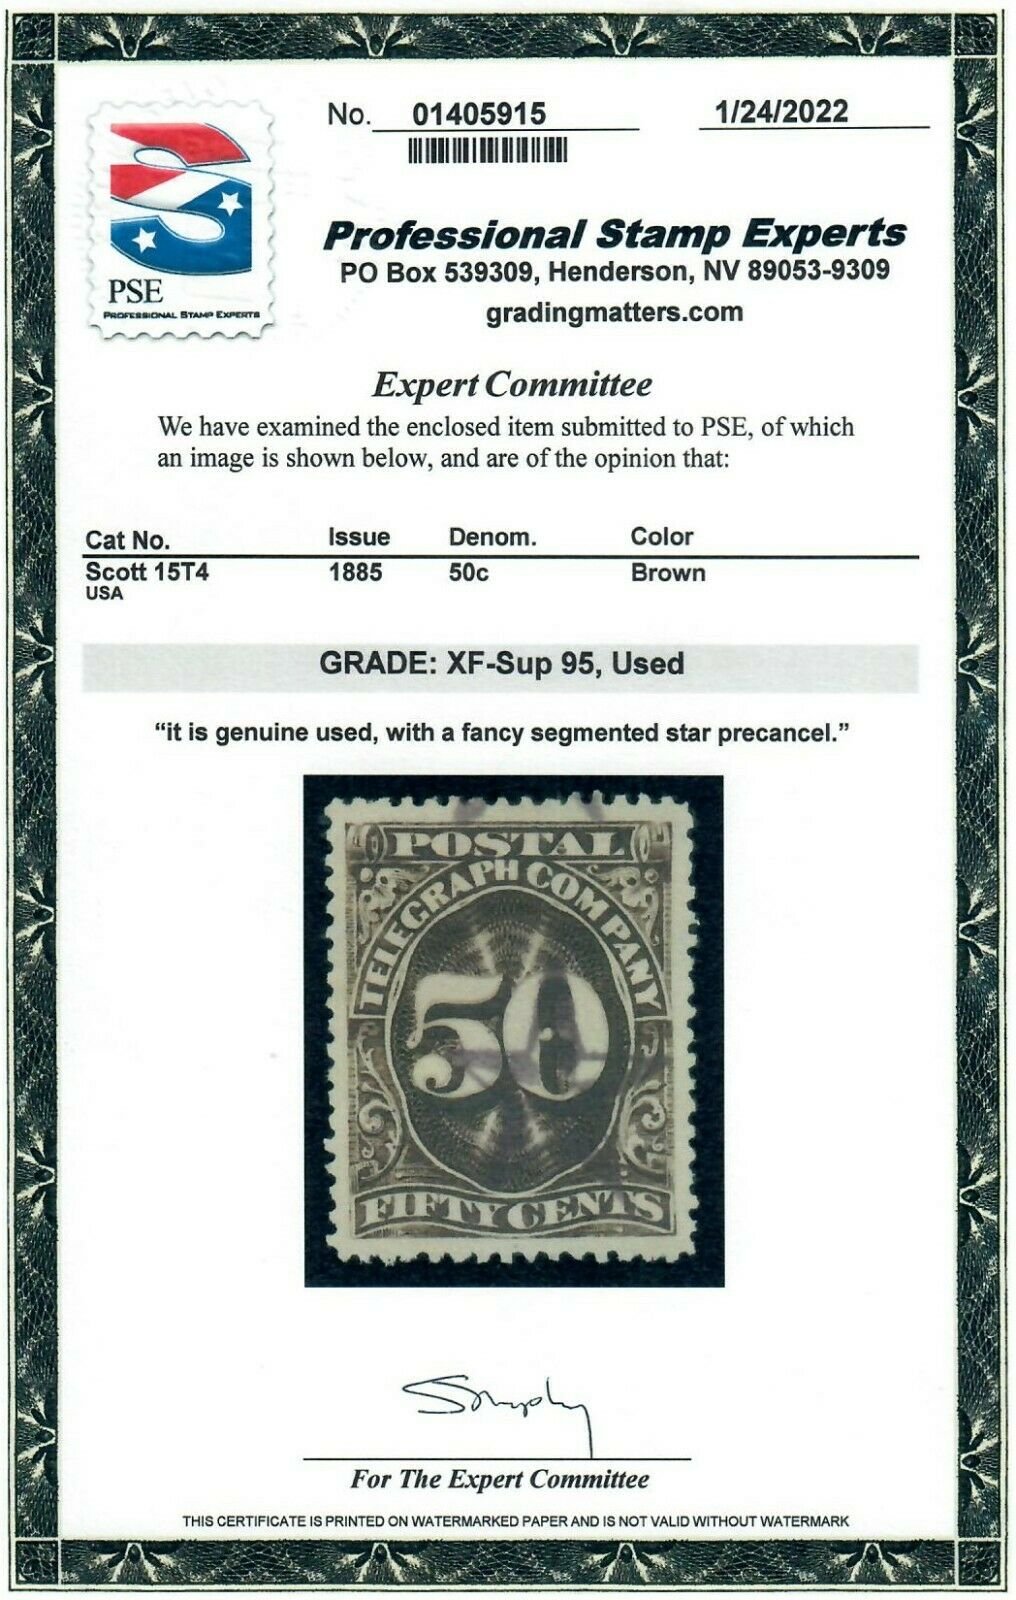 USA PSE Certificate